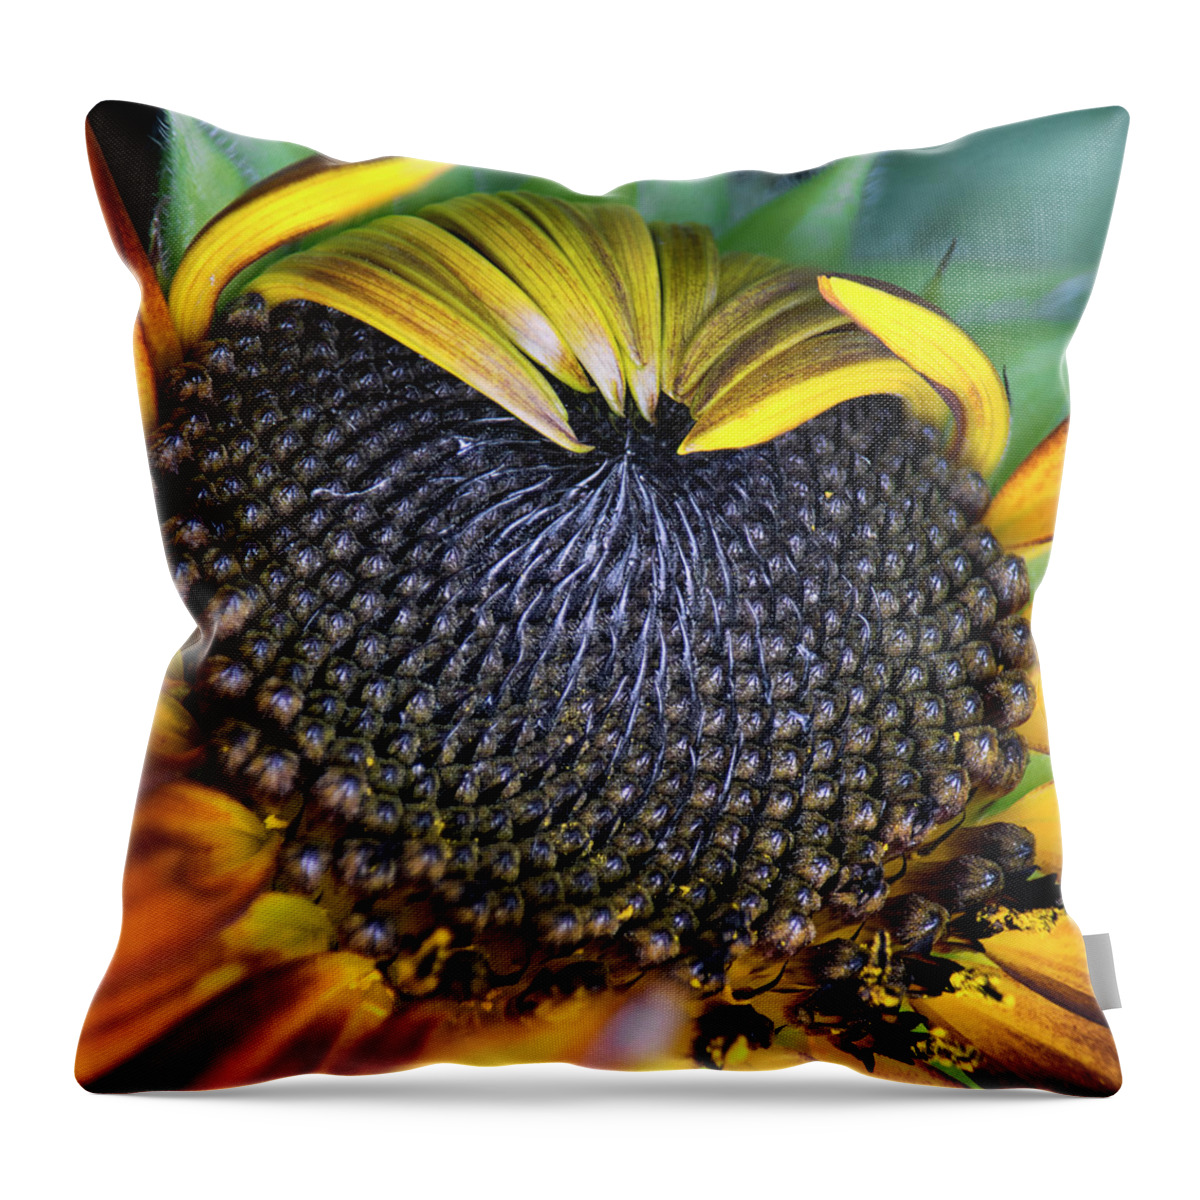 Sunflowers Throw Pillow featuring the photograph Close To Summer by Robert Fawcett